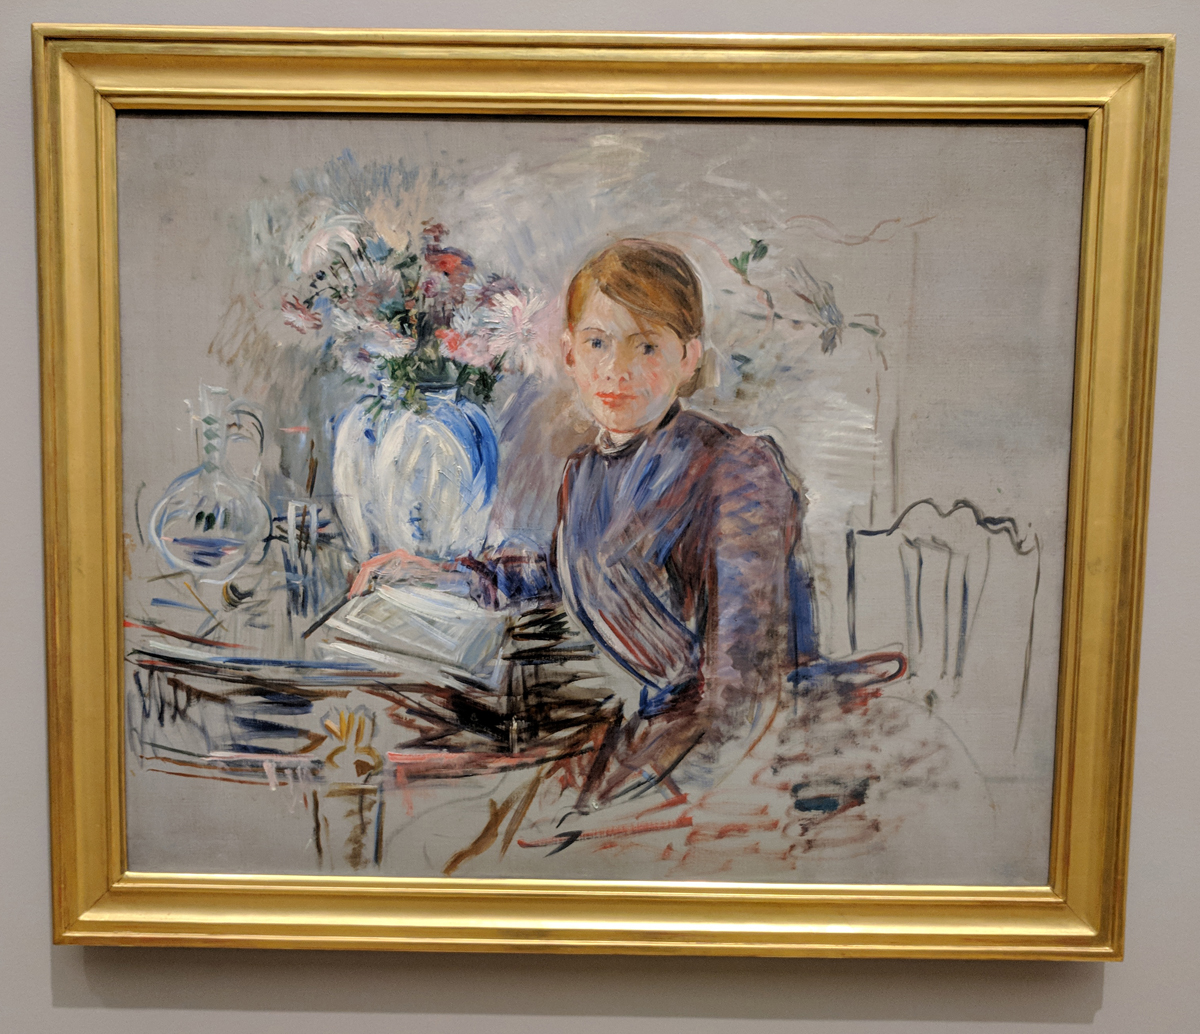 Berthe Morisot, Woman Impressionist Exhibit at the Barnes Foundation in Philadelphia